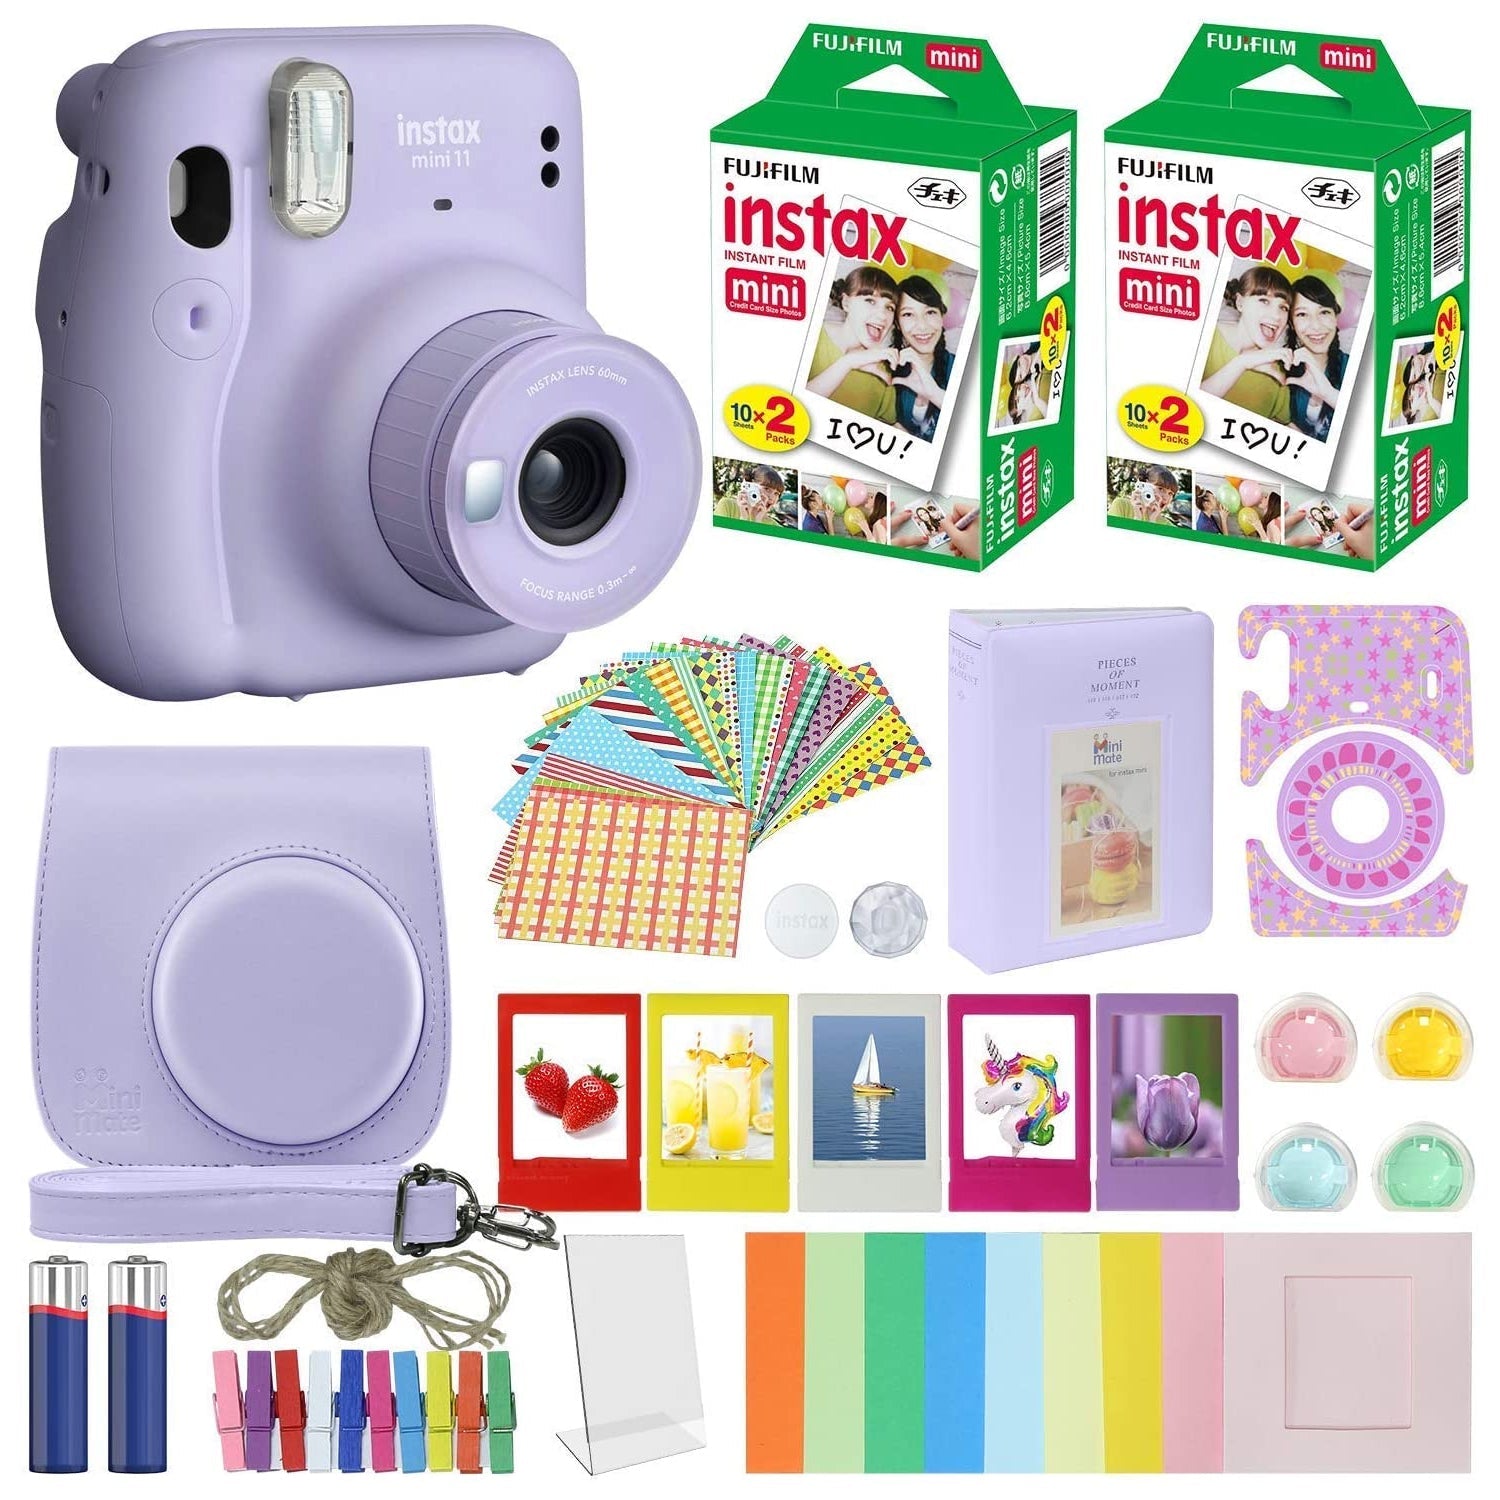 Fujifilm Instax Mini 11 Instant Camera Lilac Purple + MiniMate Accessories Bundle + Fuji Instax Film Value Pack (40 Sheets) Accessories Bundle, Color Filters, Album, Frames (Lilac Purple, Standard Packaging)